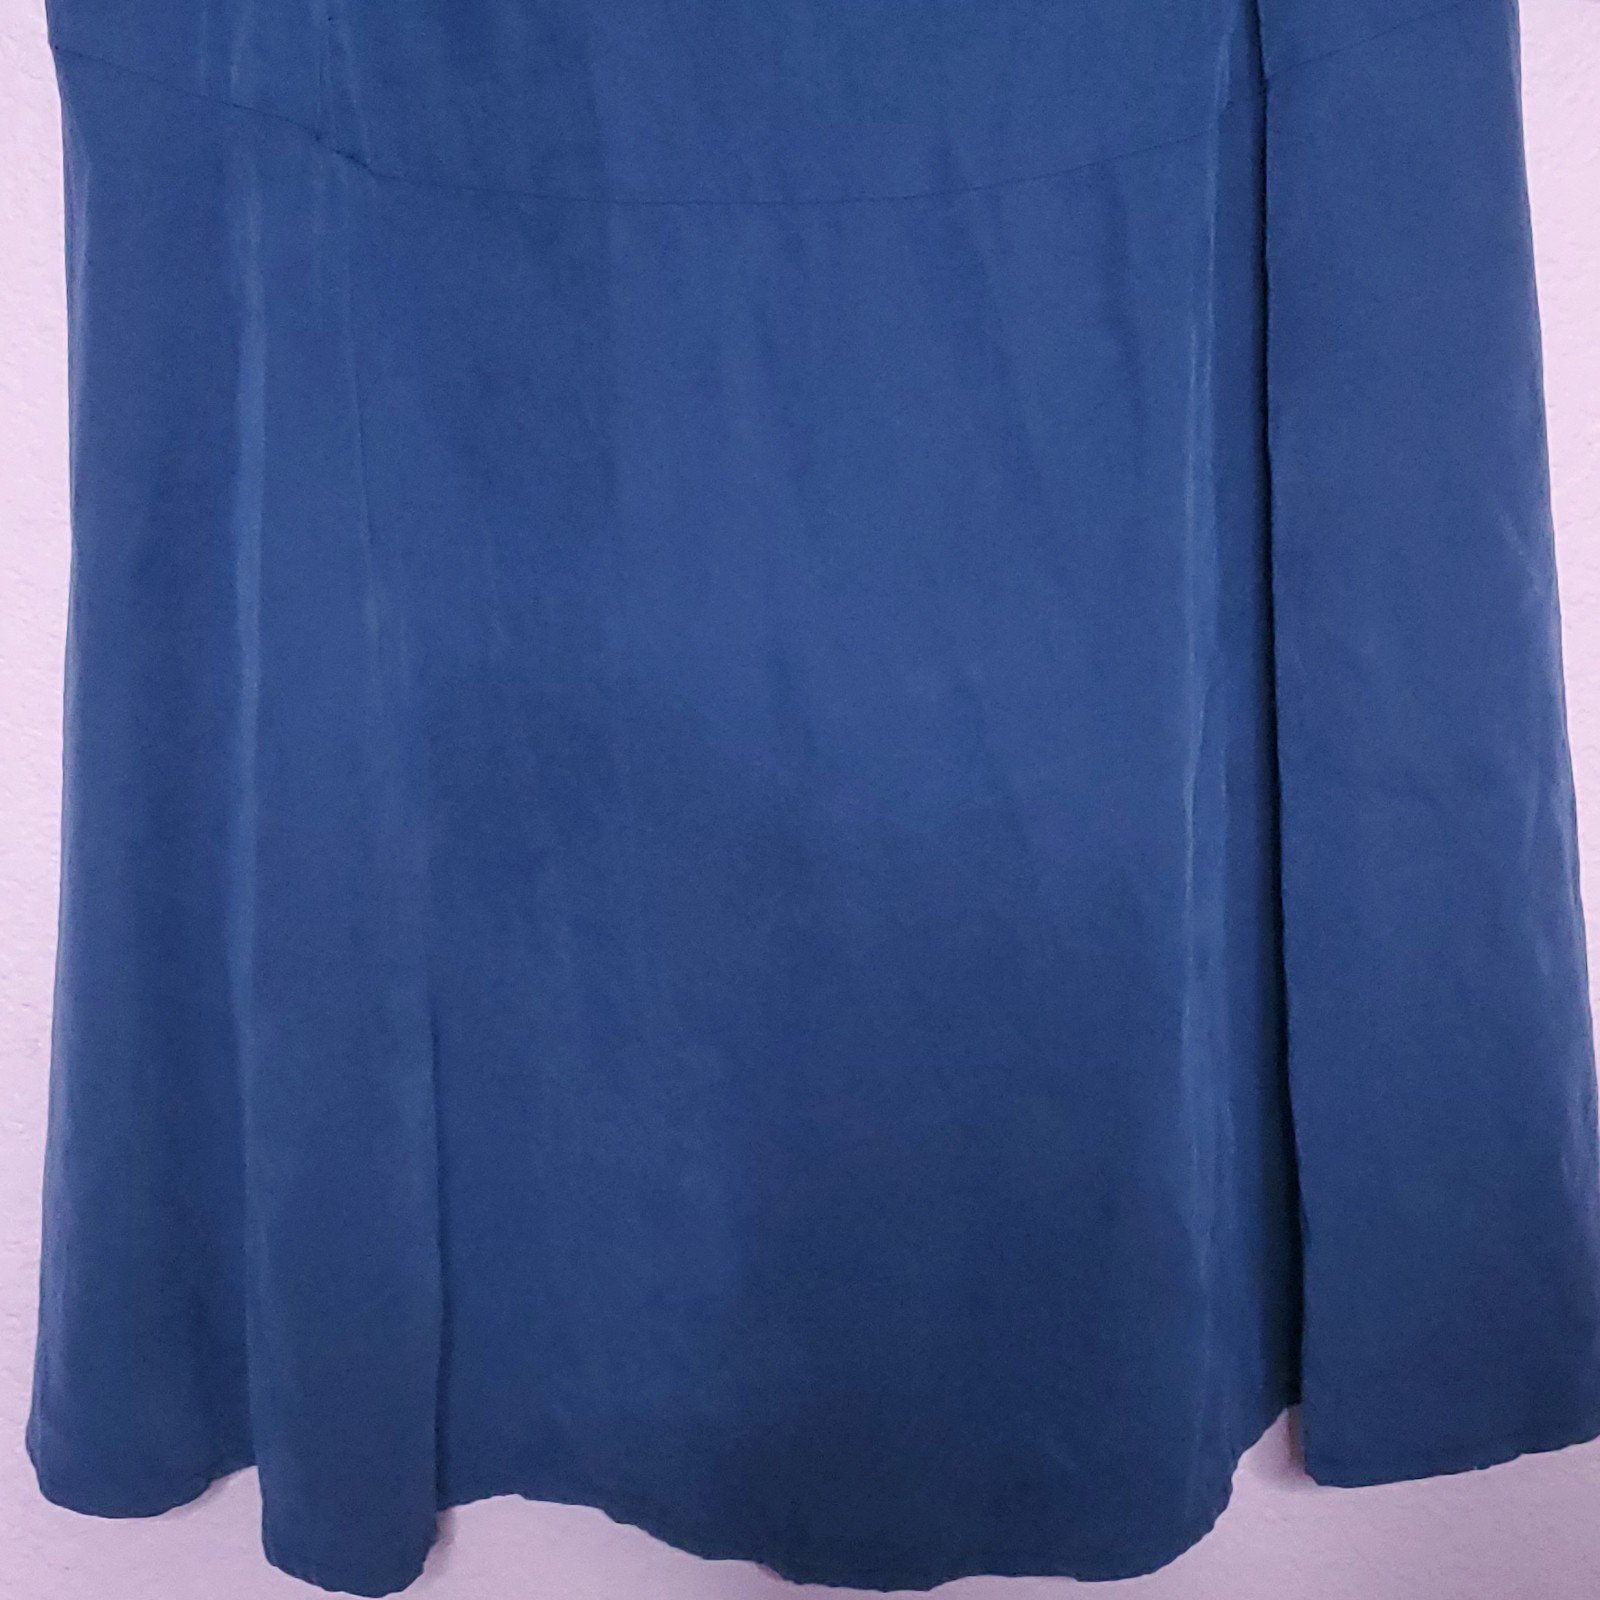 Gorgeous DressAllSaints Tiami Long Sleeve Shirt Dress in Navy Blue Ok7MdSnMG Great